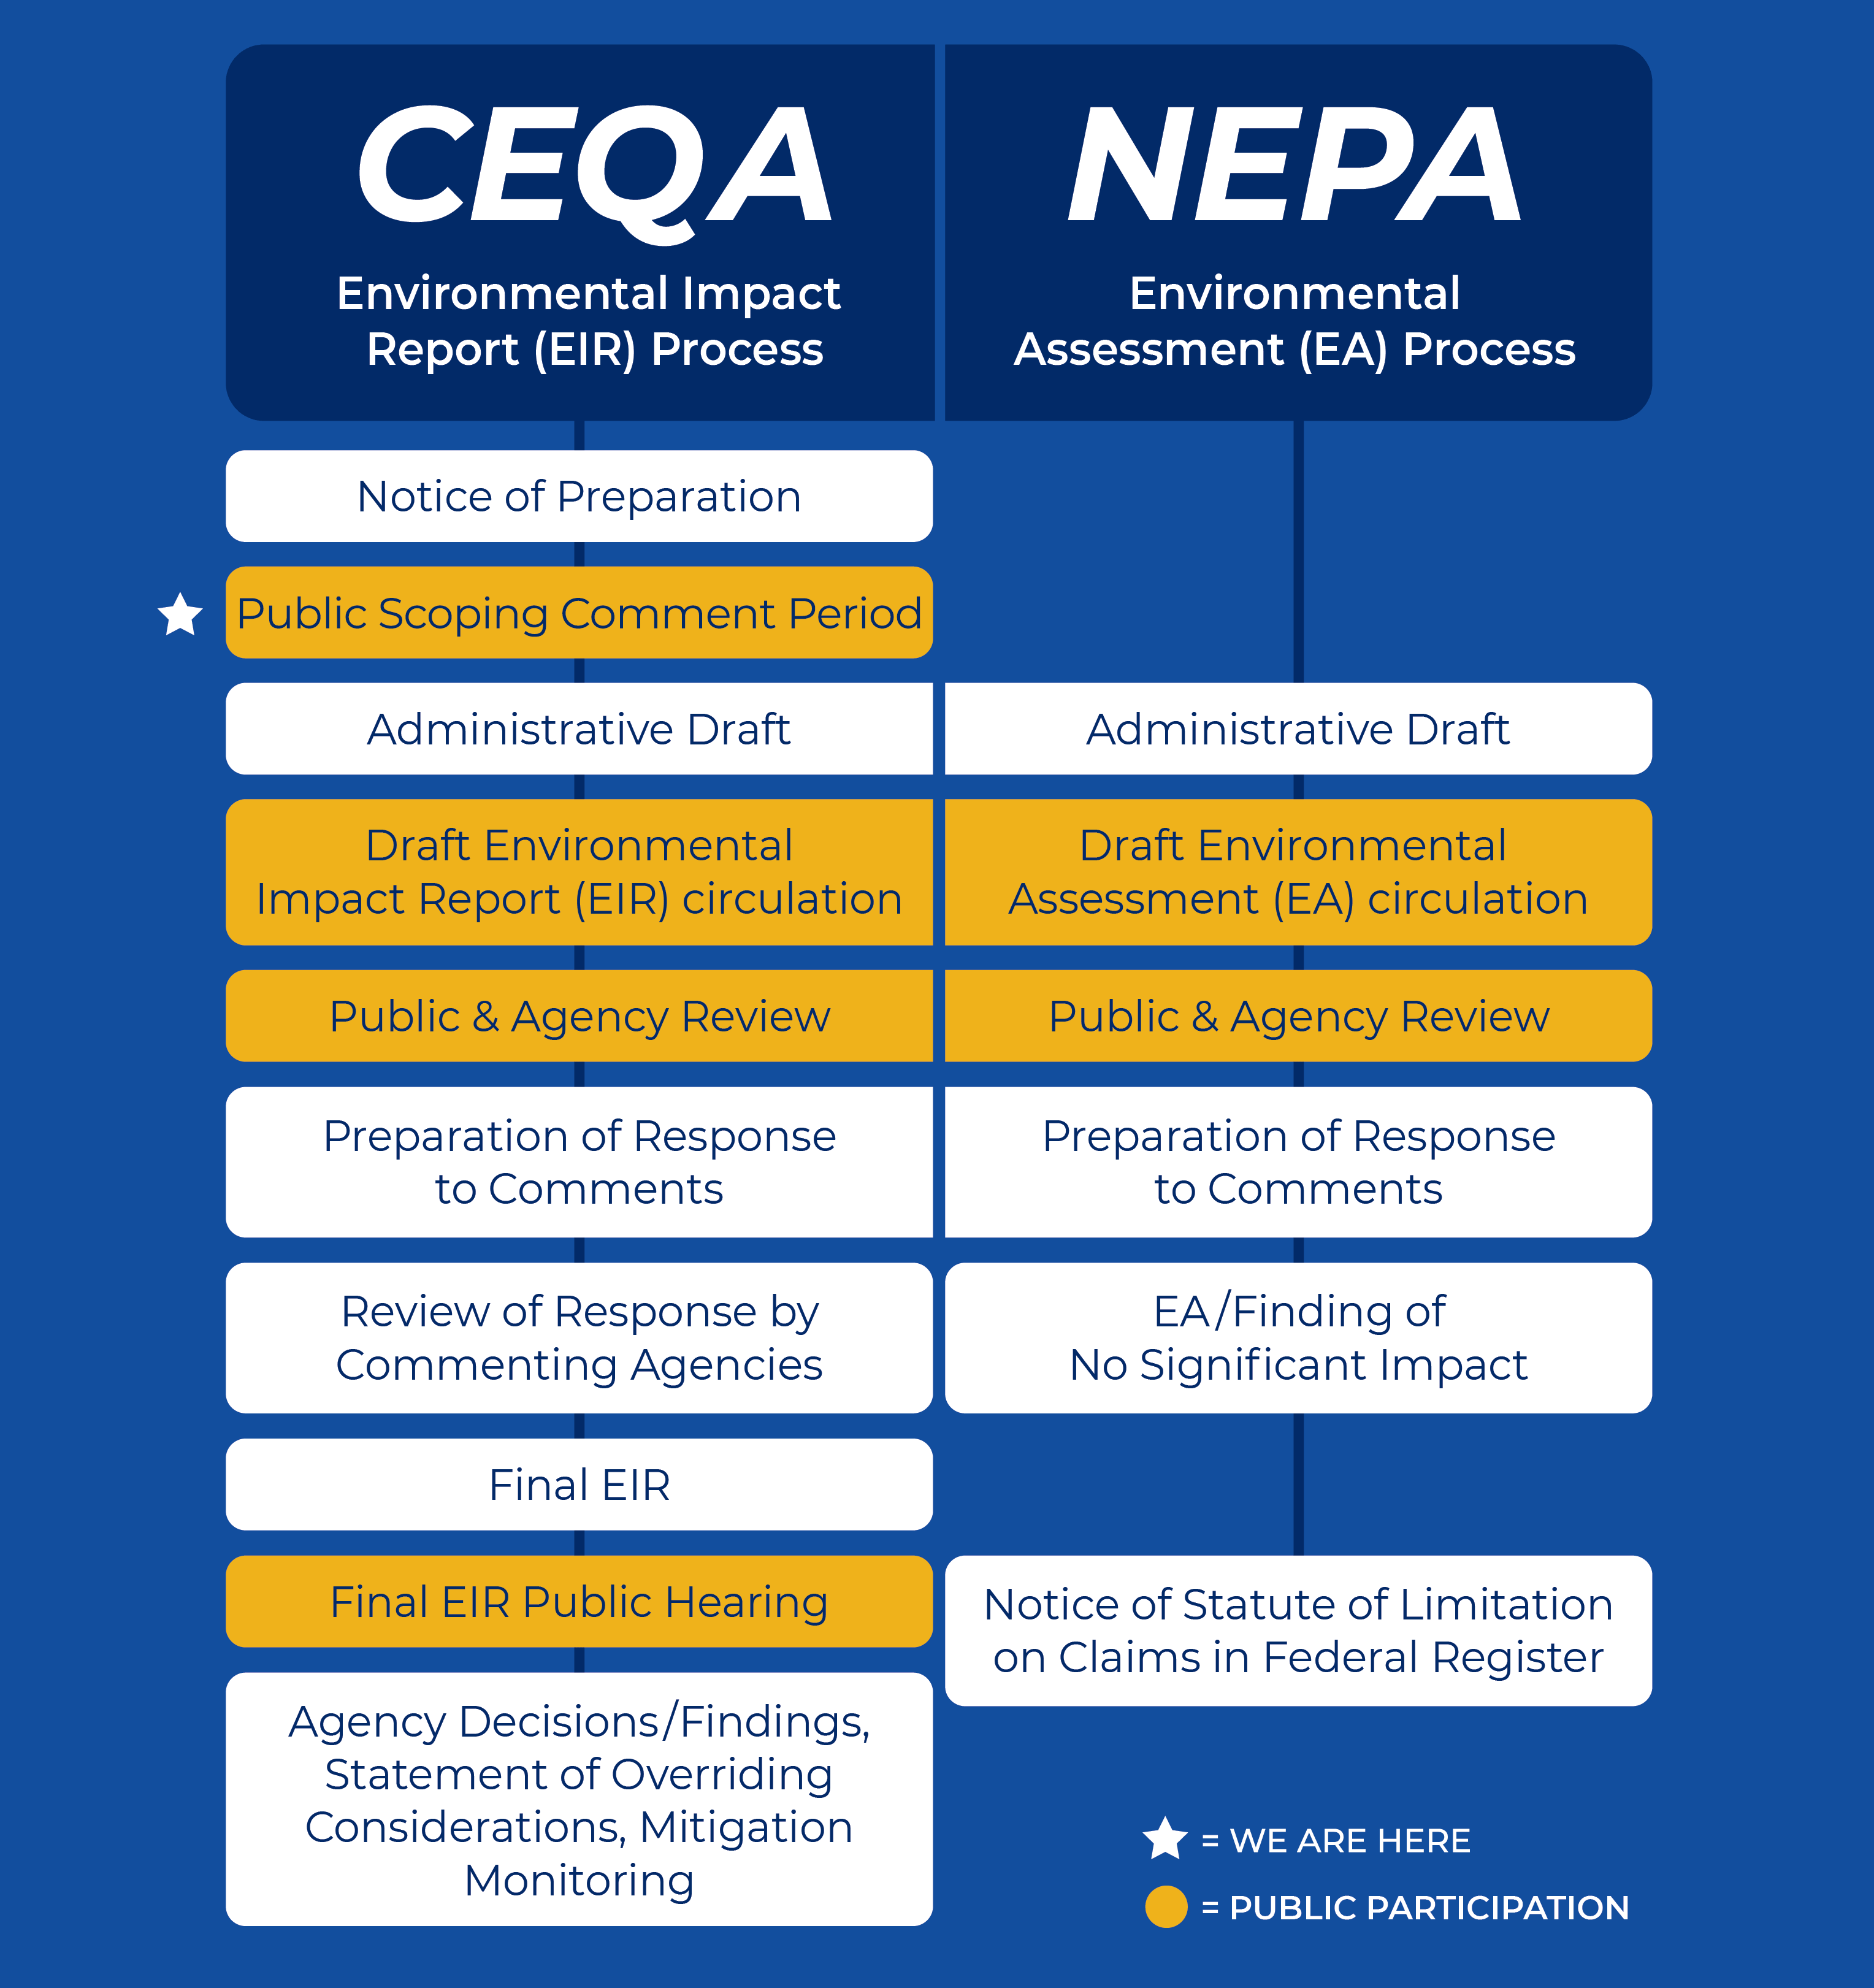 CEQA and NEPA process information